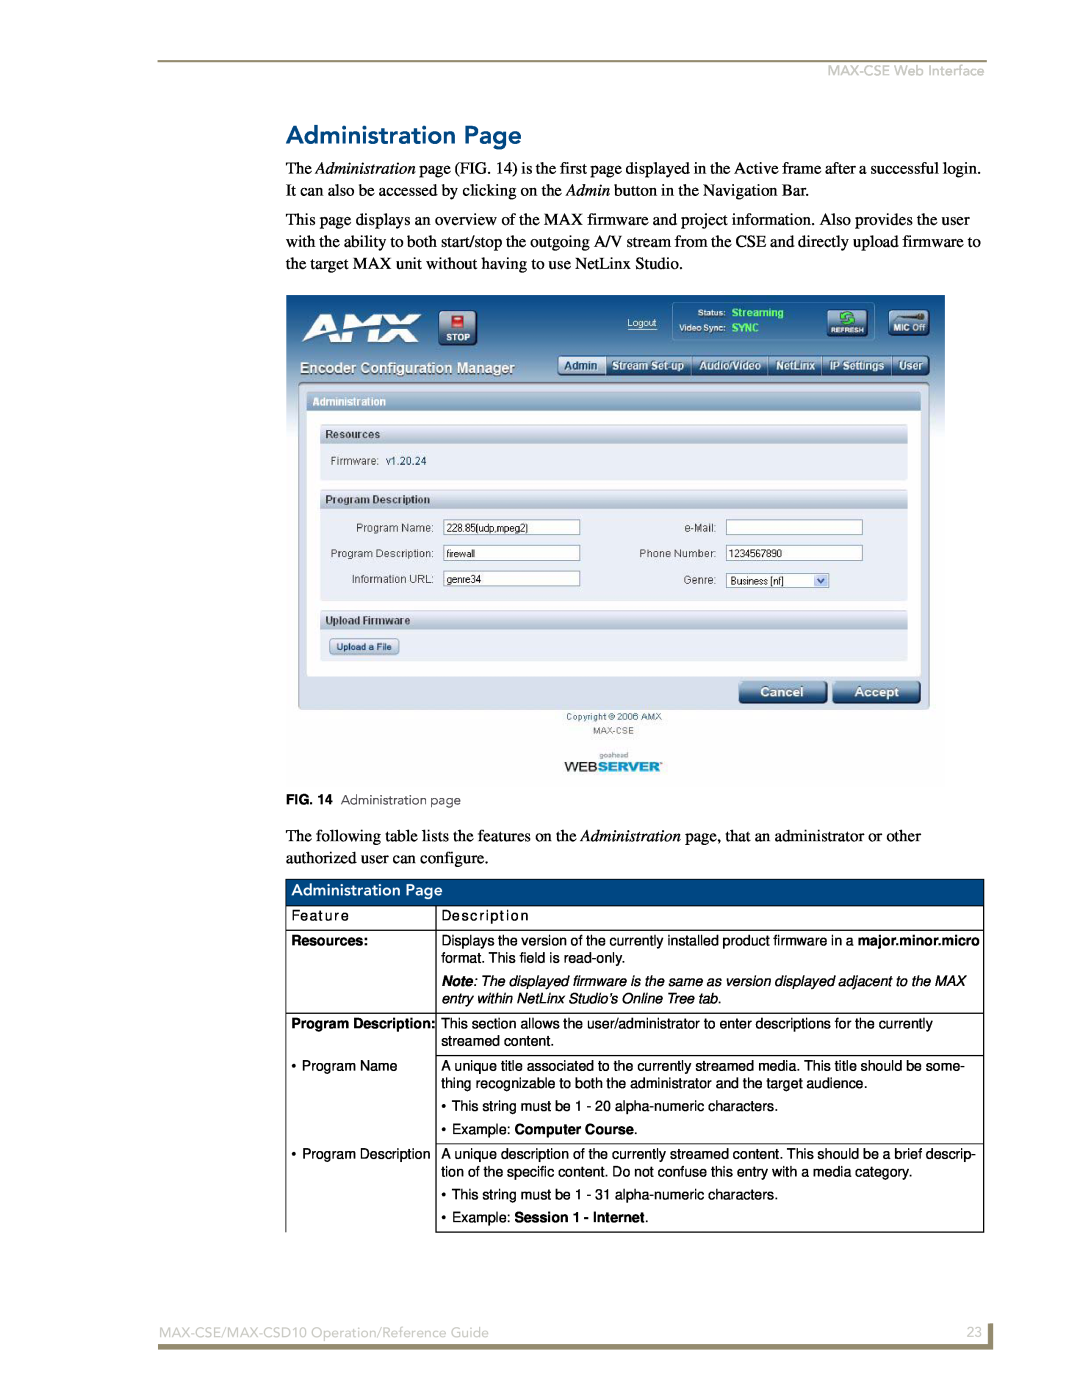 AMX MAX-CSD10, MAX-CSE manual Administration Page 